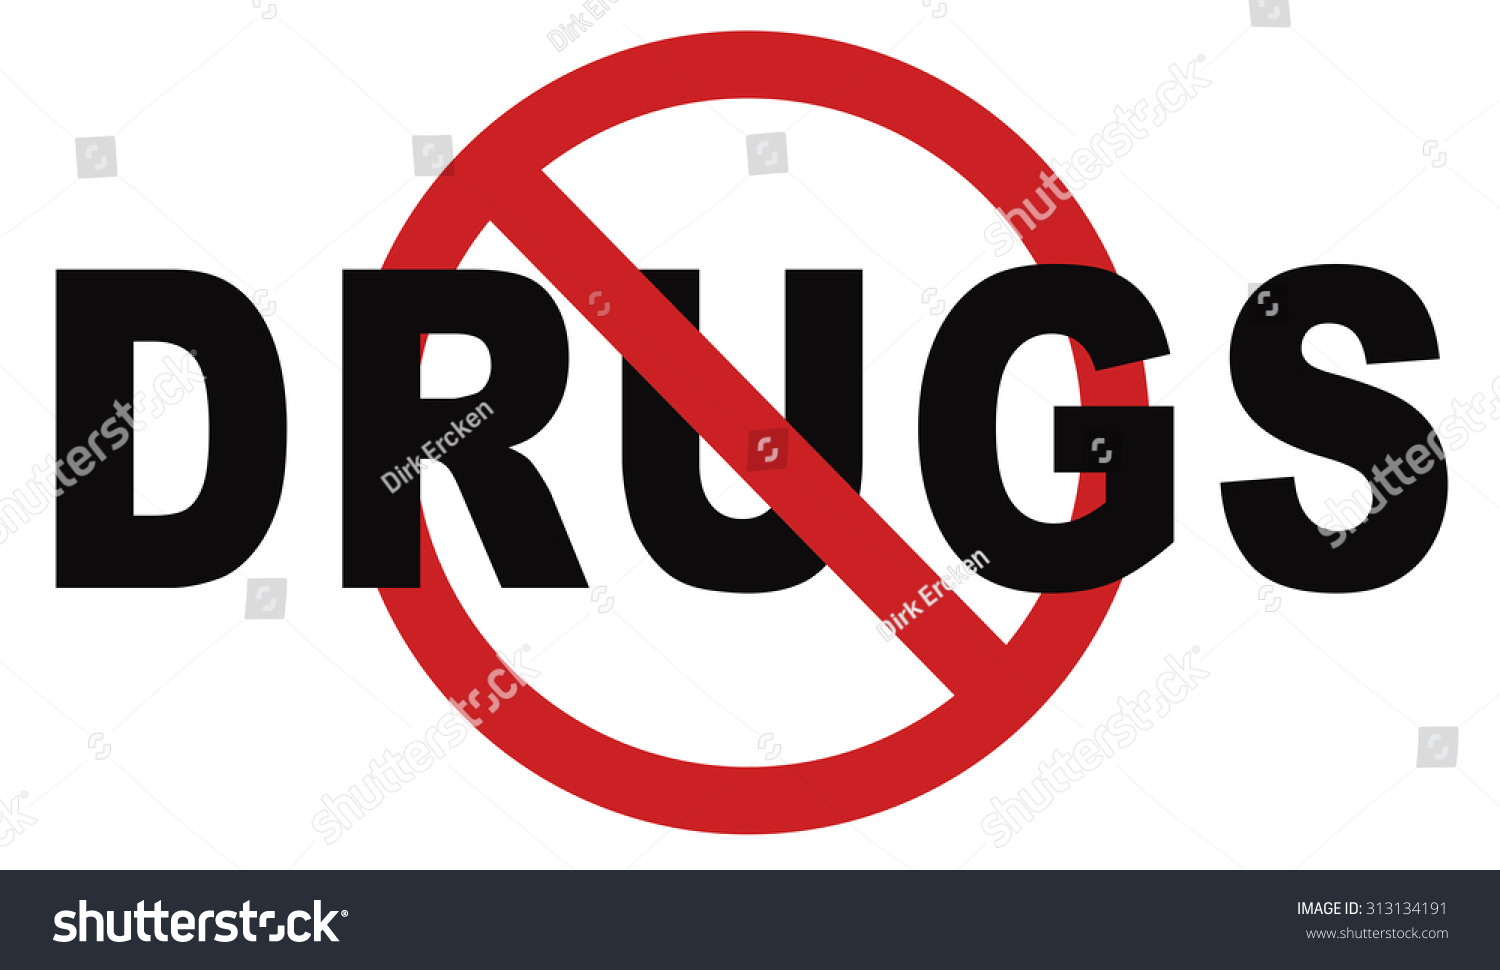 stock-photo-stop-drug-addiction-no-drugs-addict-cocaine-heroin-crack-christal-meth-313134191.jpg